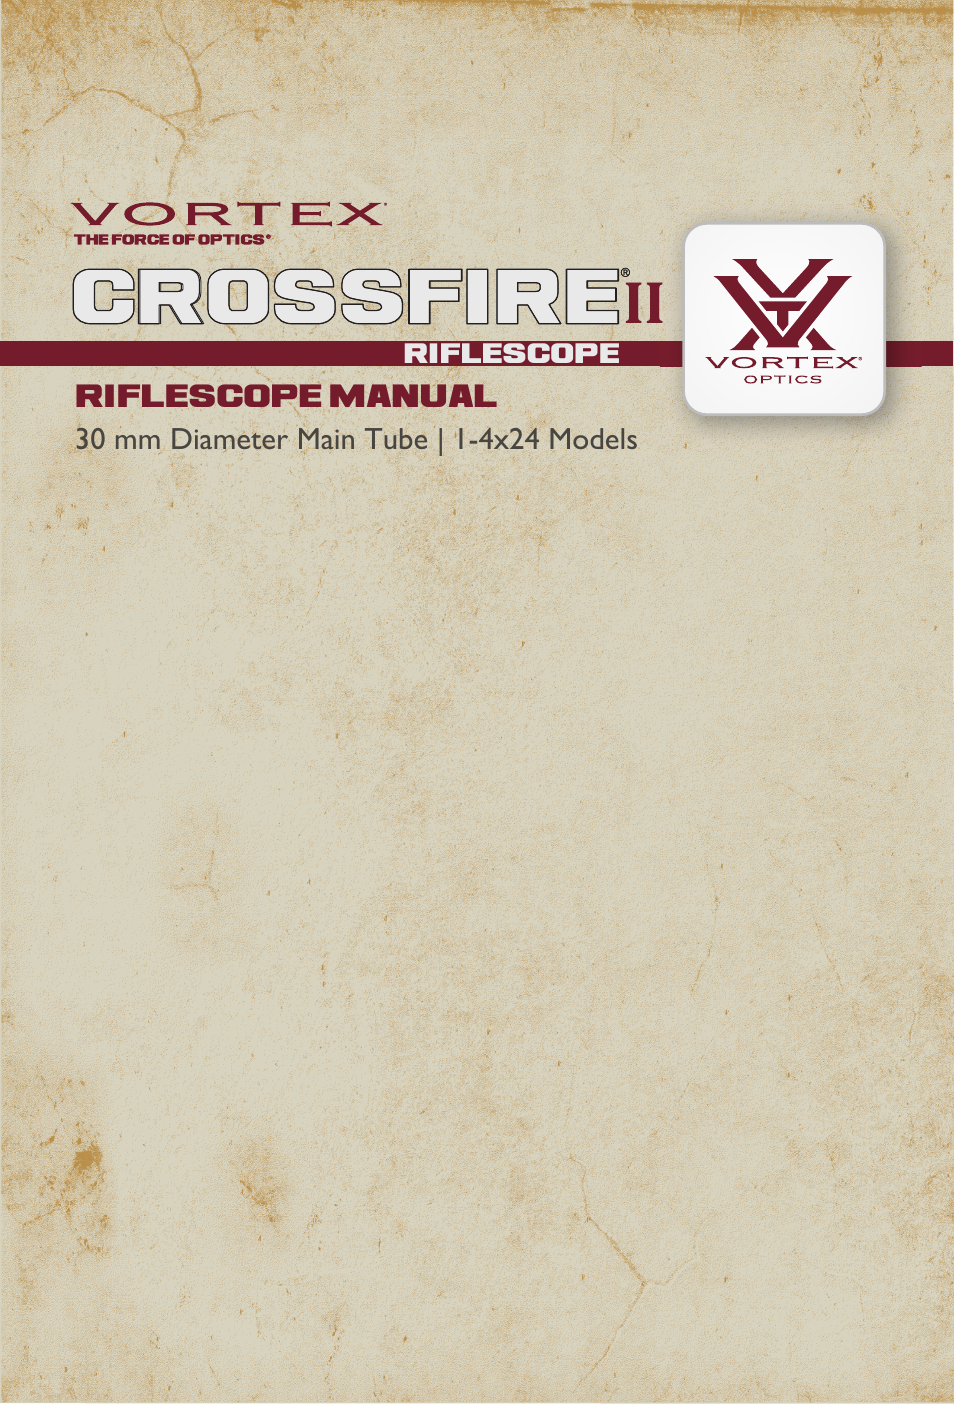 CROSSFIRE II 1-4X24 RIFLESCOPE